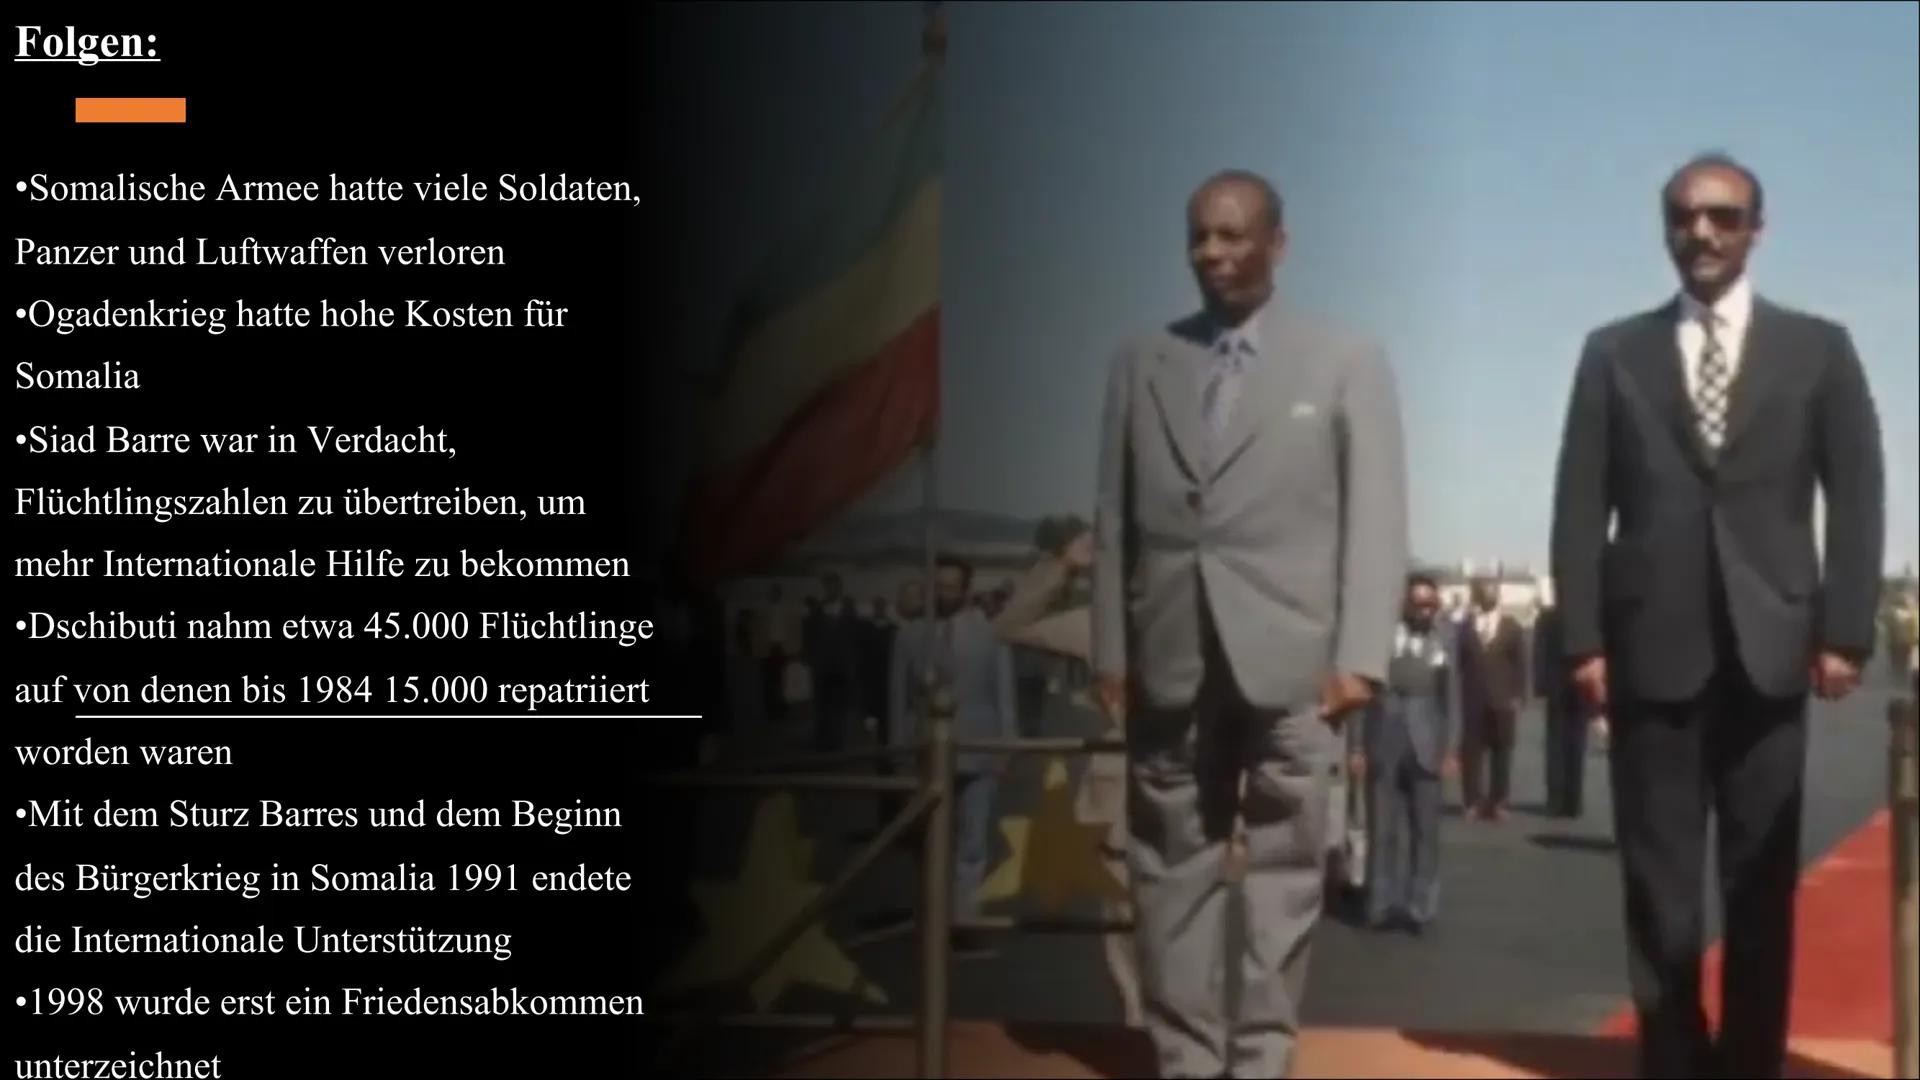 Mengistu Haile Mariam
Staatsoberhaupt Äthiopiens
SOUTHERN PEOPLES.
NATIONS & NATIONALITIES
WOLLO AFAR
●
AMHARA
SCHOAS
Addis Abeba
ARSI
SIDAM